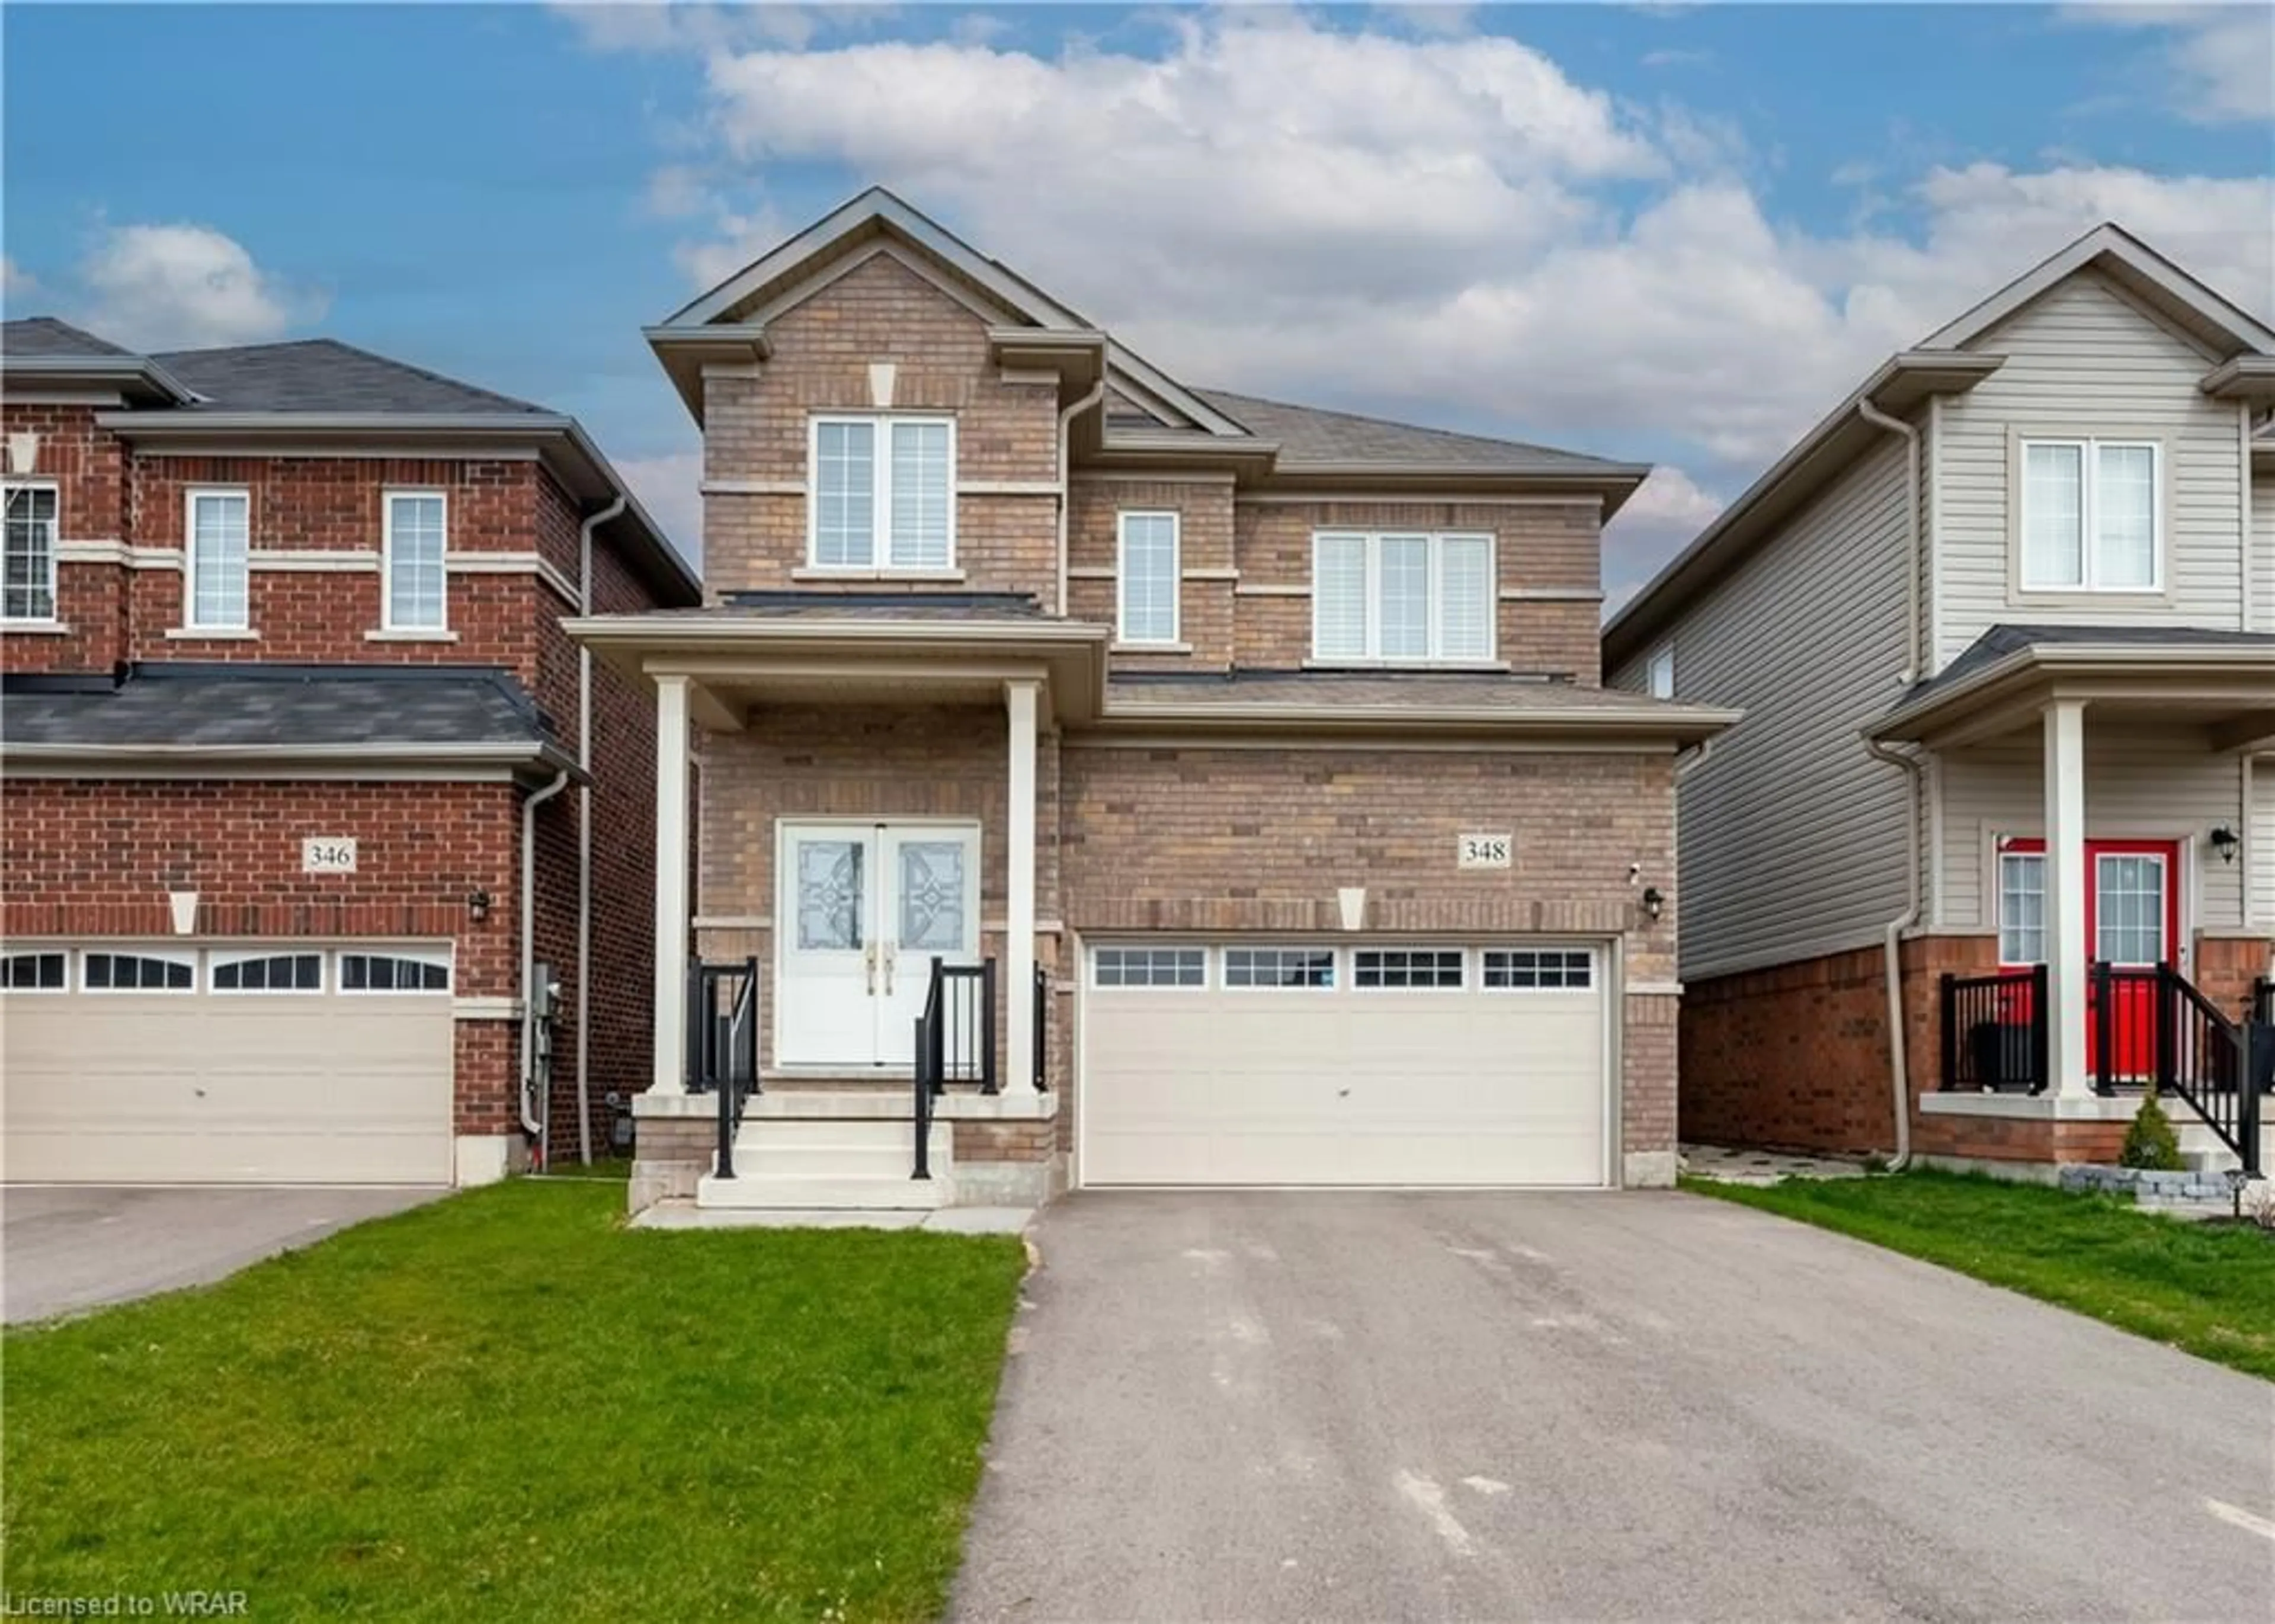 Frontside or backside of a home for 348 Van Dusen Ave, Dundalk Ontario N0C 1B0